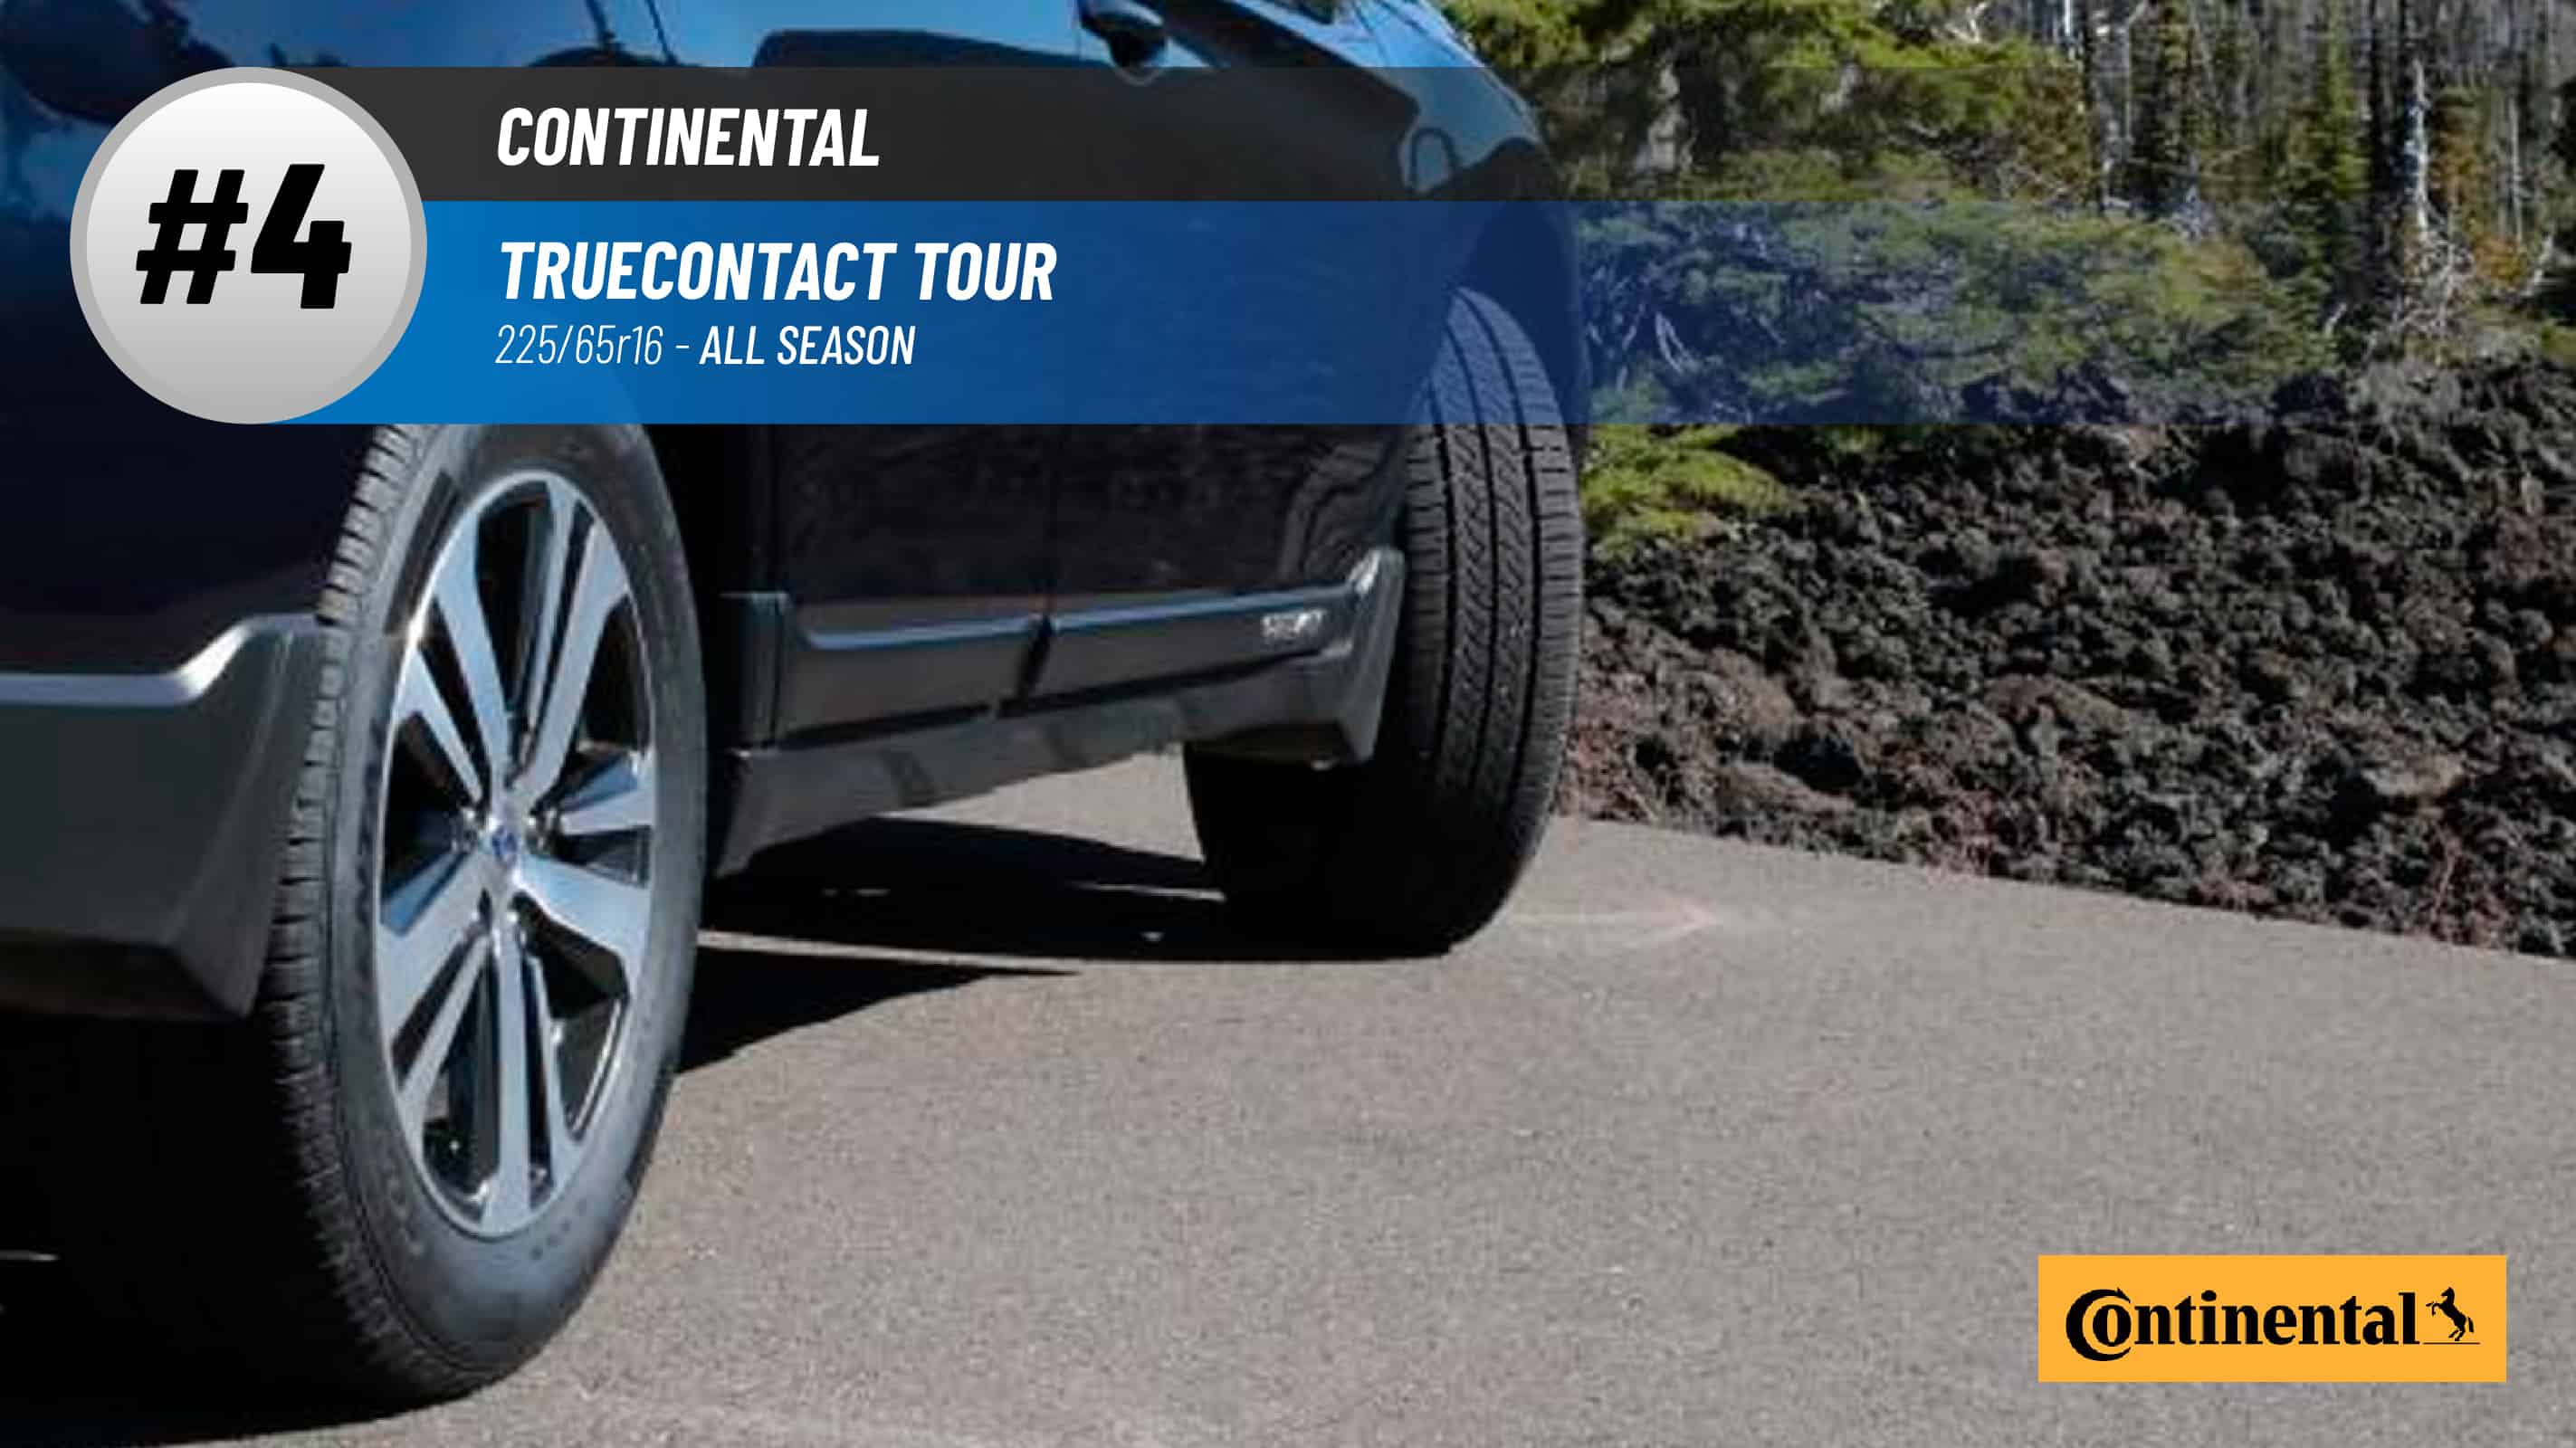 Top #4 All Season Tires: Continental TrueContact Tour – 225/65r16